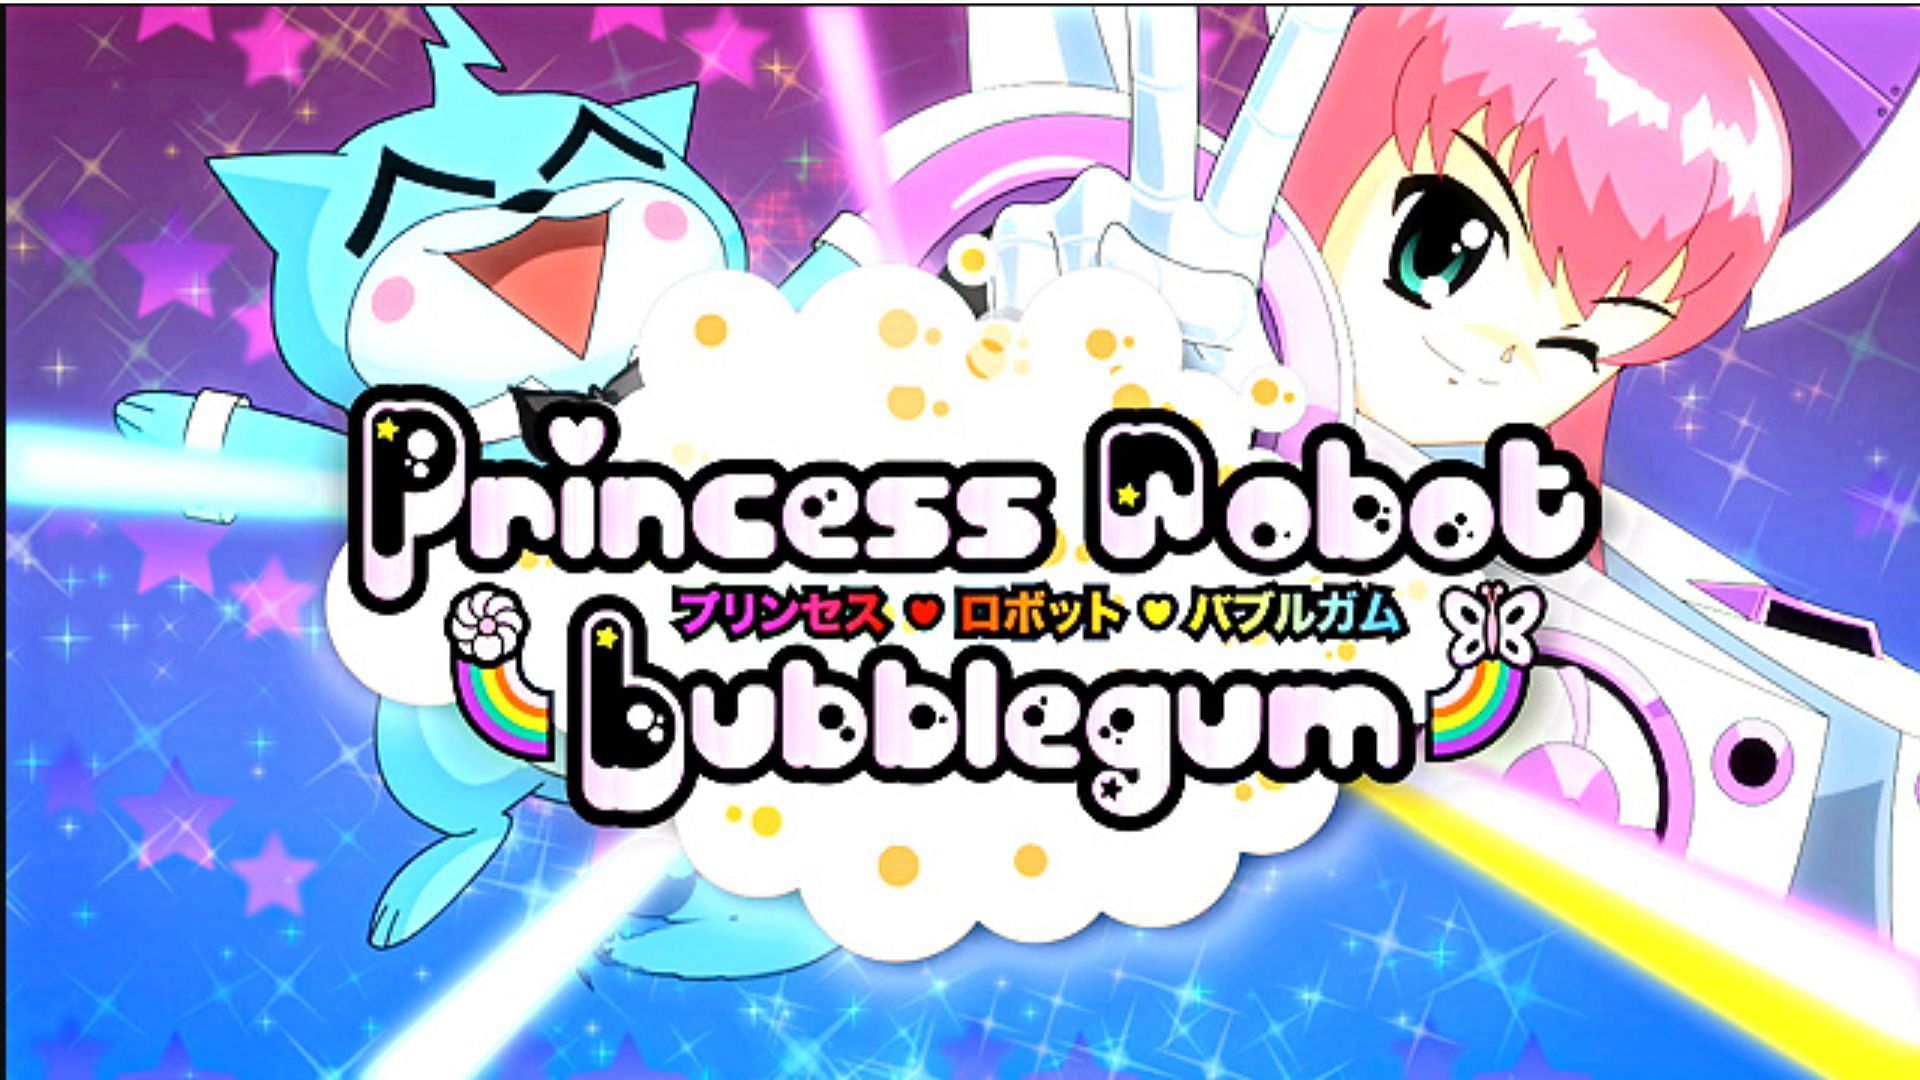 Princess Robot Bubblegum is a japanese anime series in GTA (image via Rockstar Games)